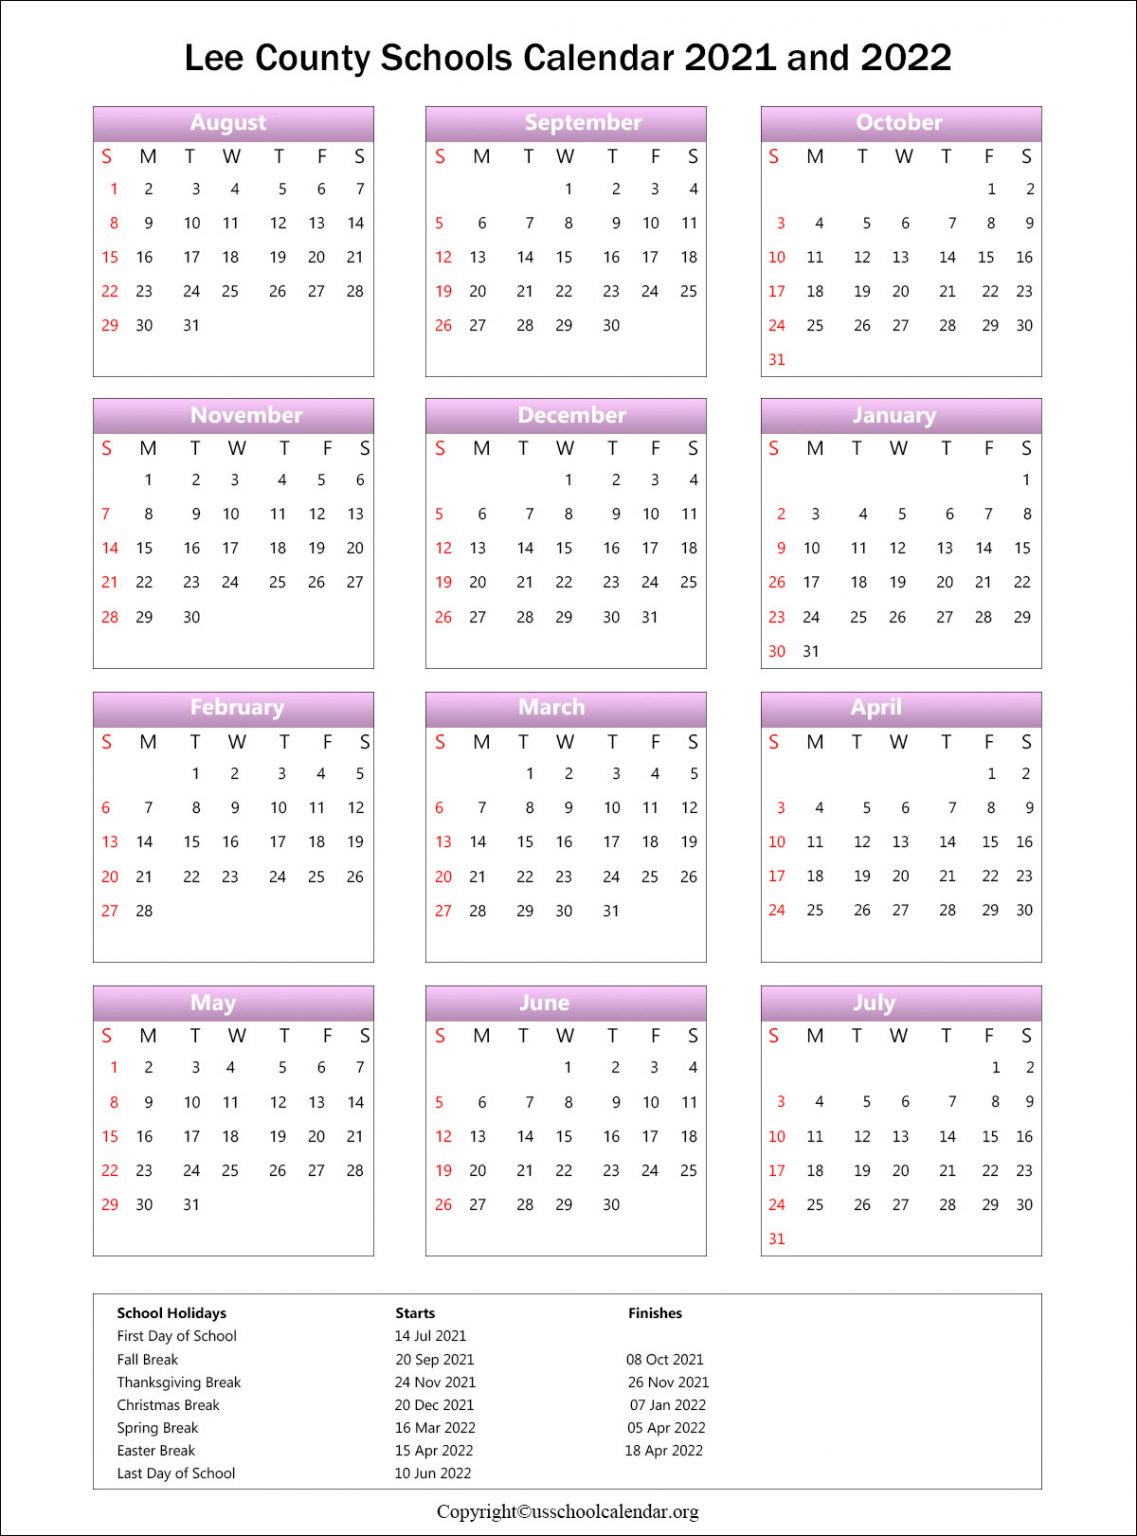 Lee County School Calendar with Holidays 2021-2022